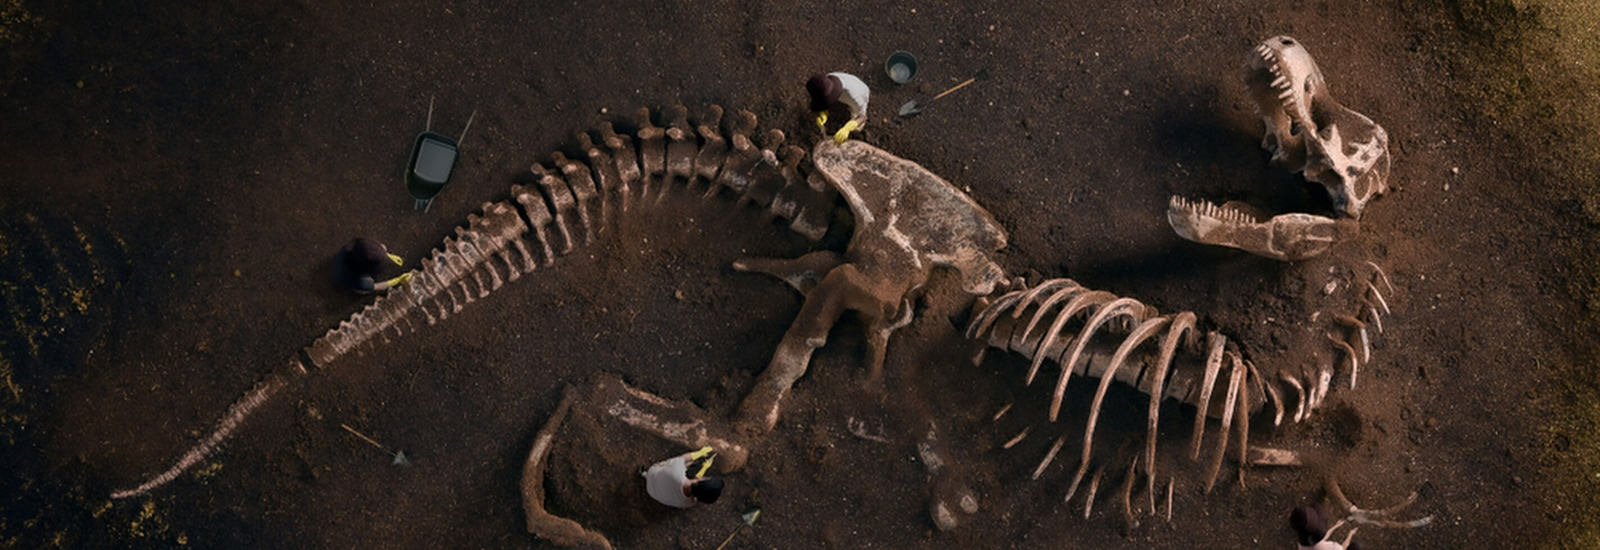 Two people digging up a large dinosaur skeleton  